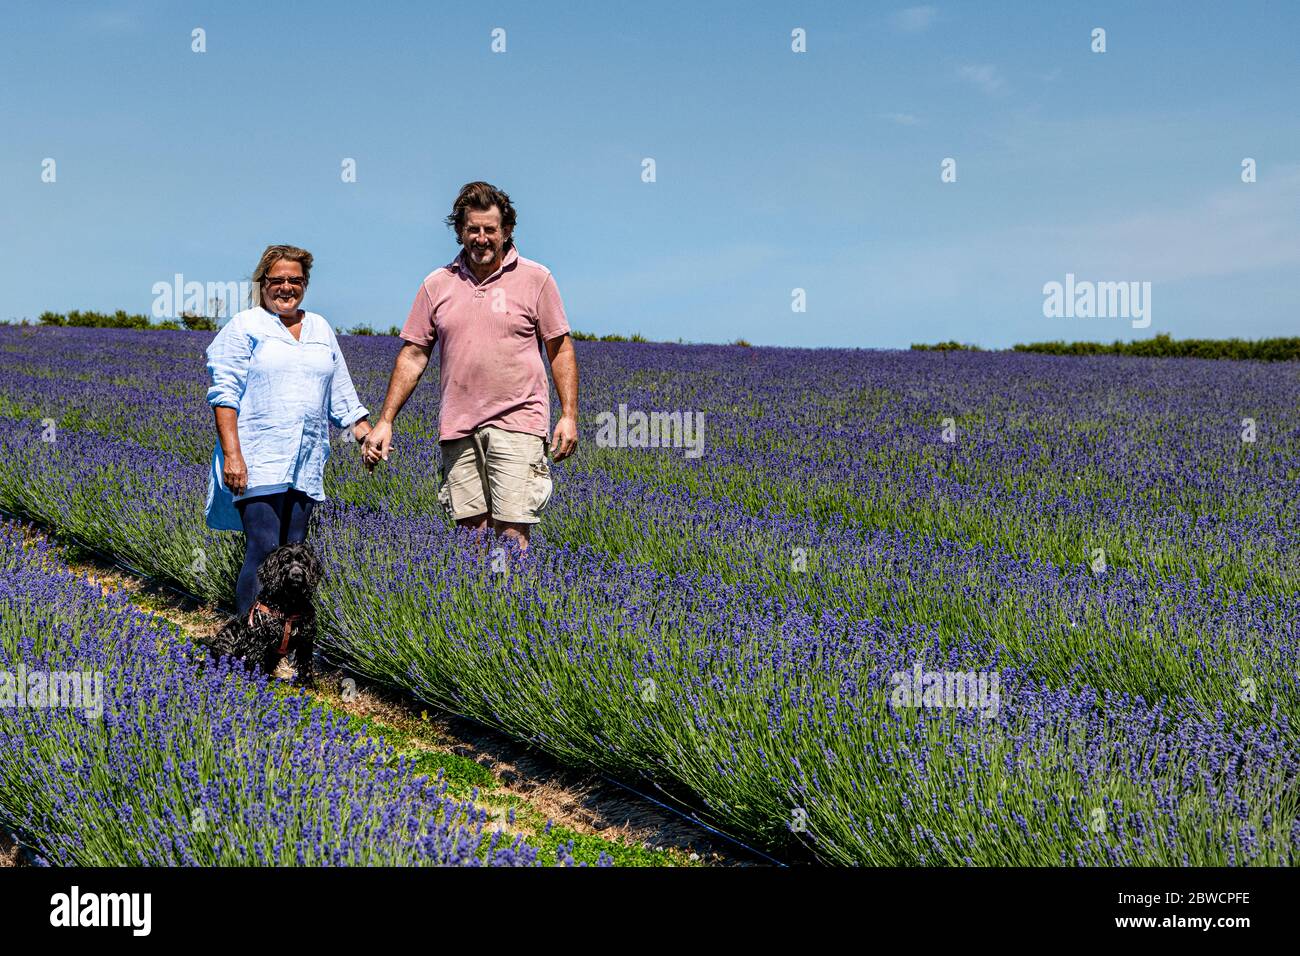 Roskorwell Farm Cornwall's first lavender farm Credit: kathleen white/Alamy Live News Stock Photo